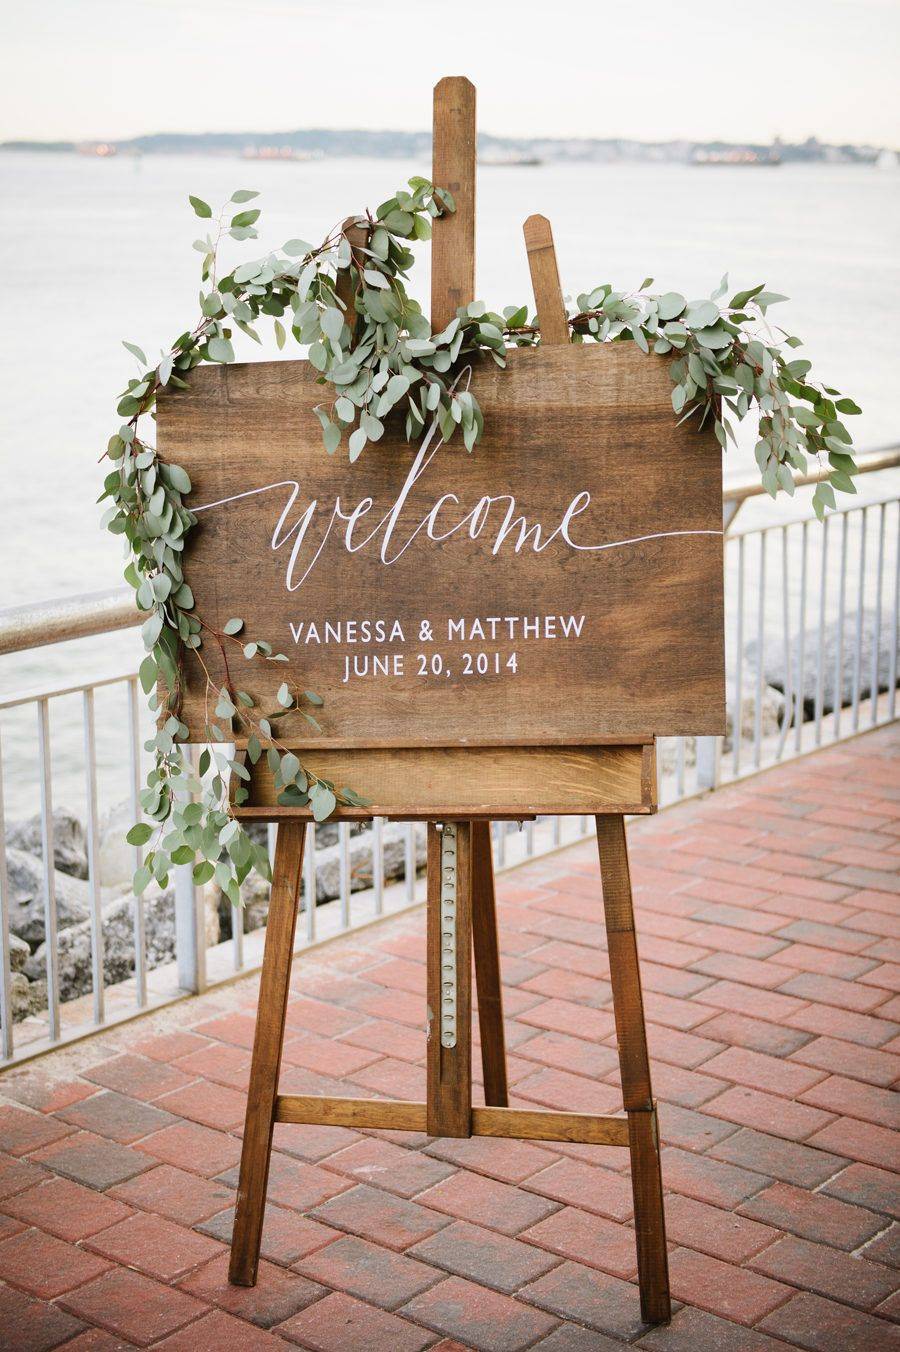 Decoración de boda al aire libre: cartel para boda al aire libre, Pinterest.